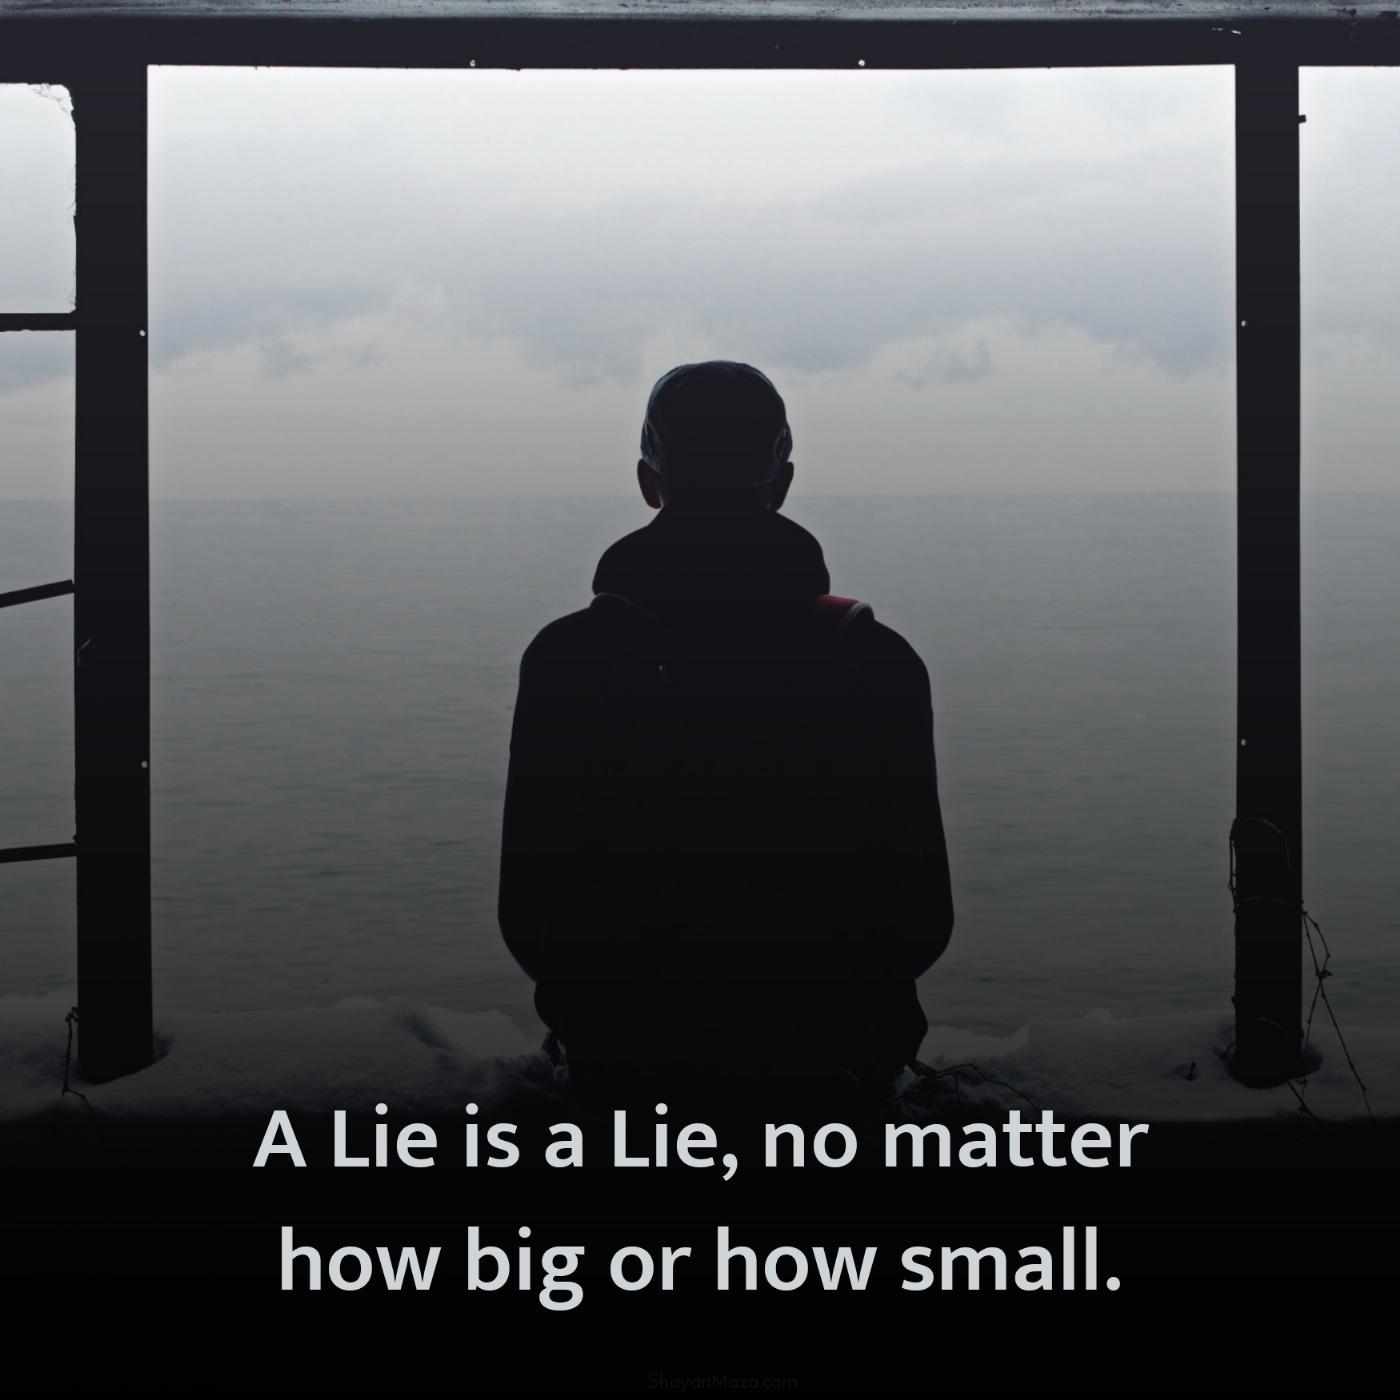 A Lie is a Lie no matter how big or how small